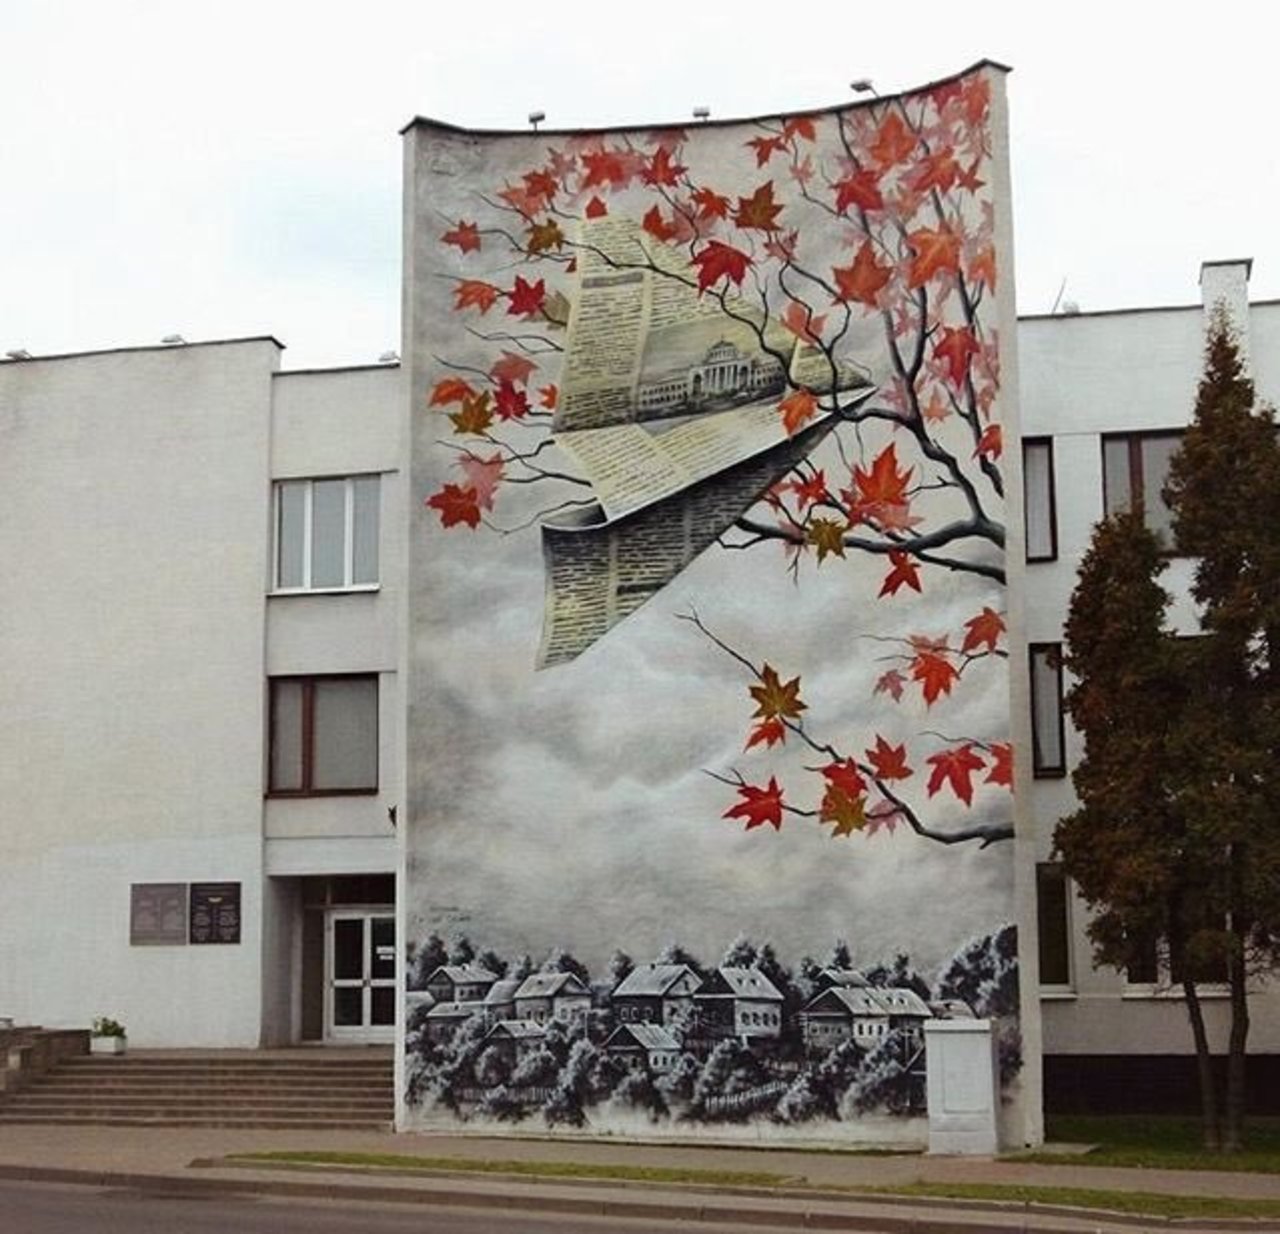 GoogleStreetArt : New Street Art by MUTUS in Belarus 

#art #graffiti #mural #streetart … http://twitter.com/GoogleStreetArt/status/658724669734965252 https://t.co/r9zeKGetwy